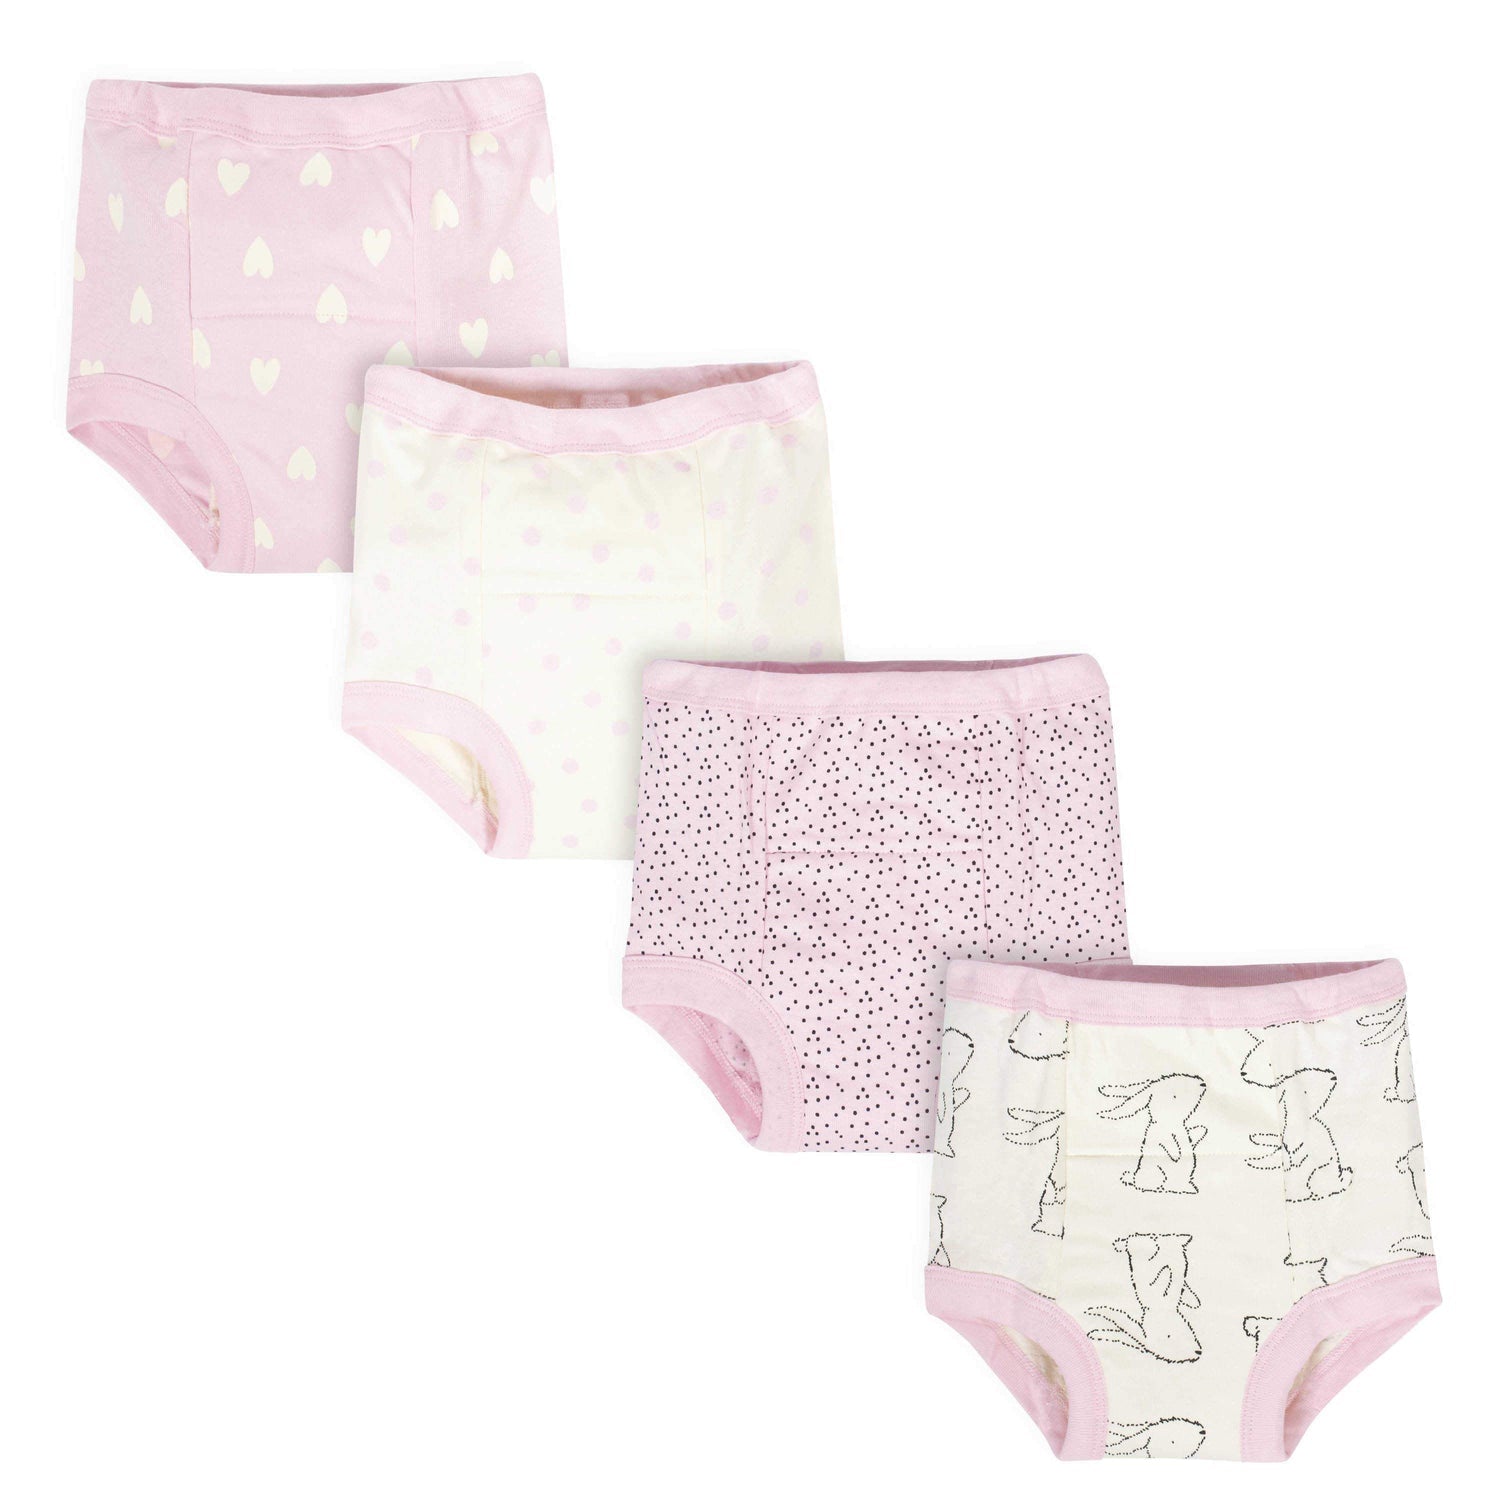 Gerber Baby Boys Infant Toddler 4 Pack Potty Training Pants Underwear